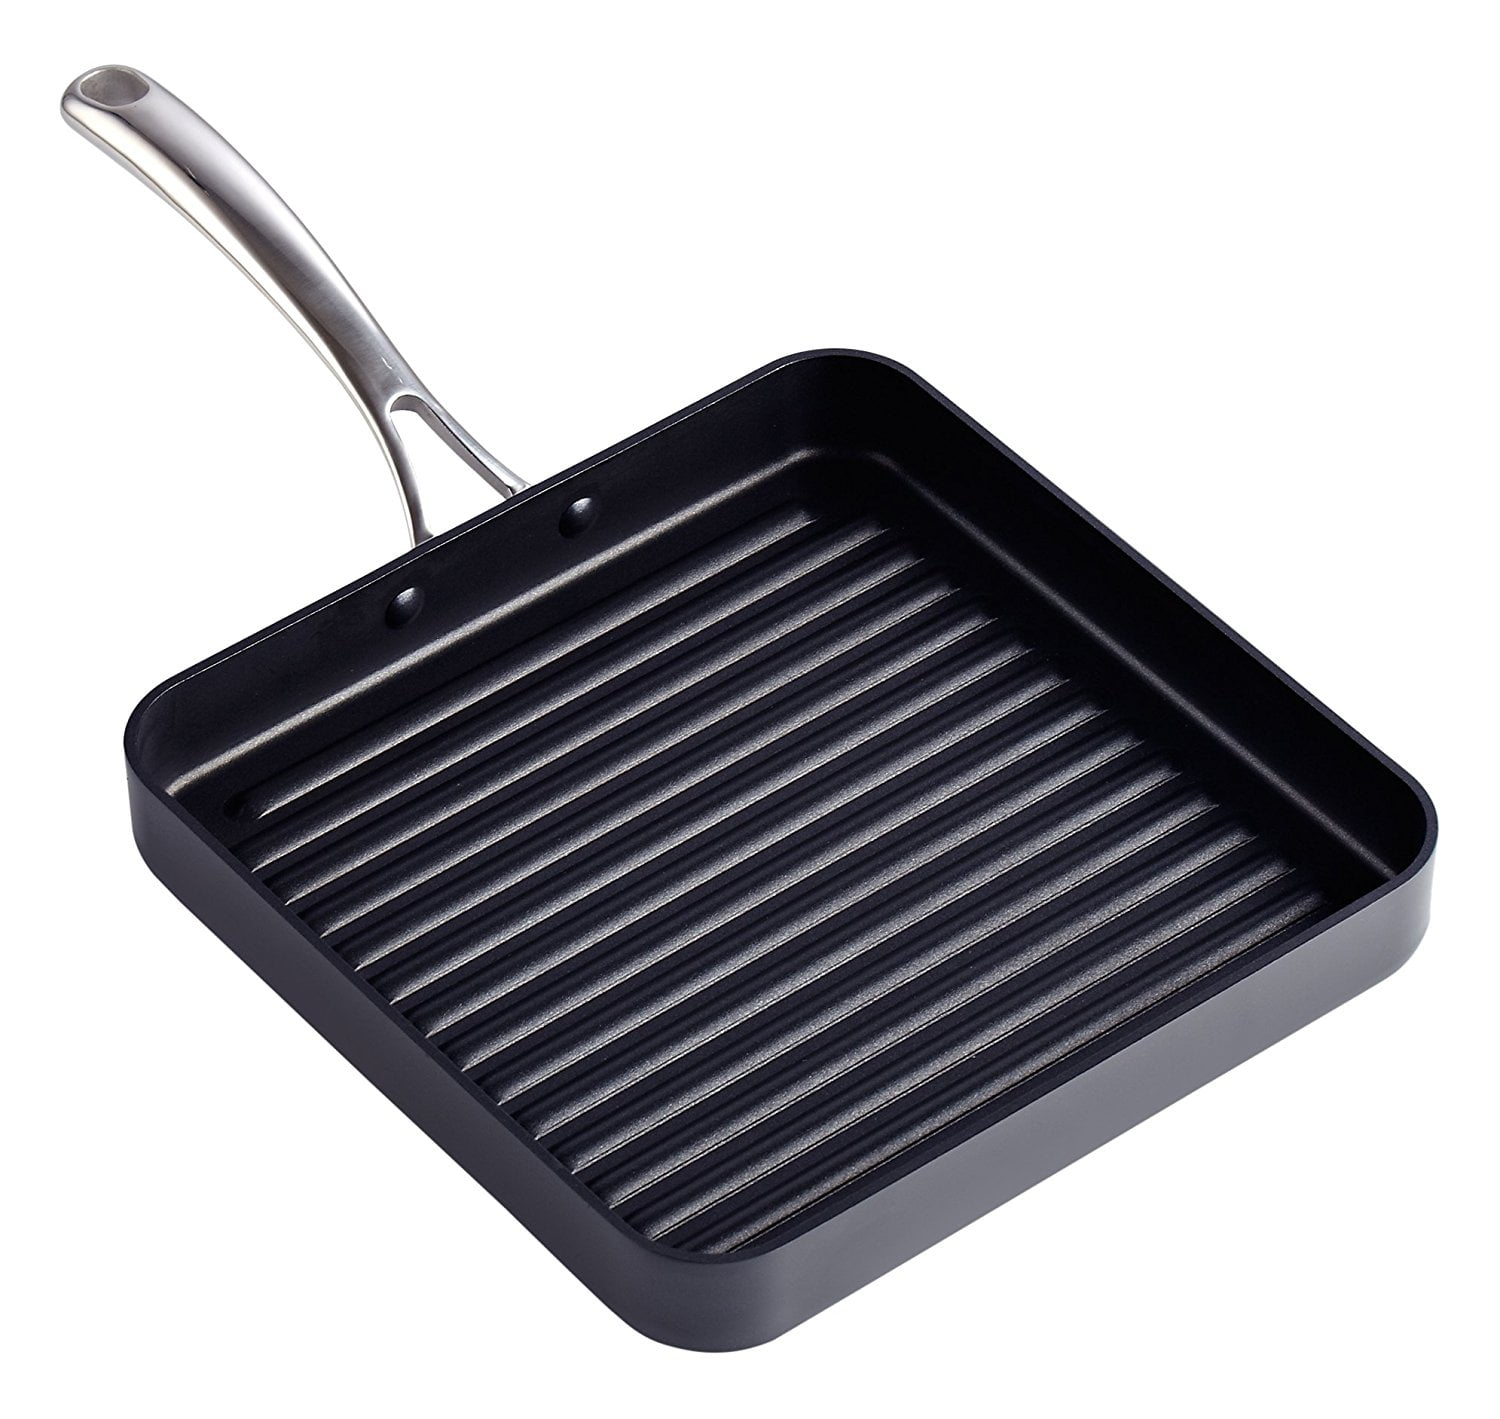 Tognana Wood & Stone Style Fry Pan -  Premium Frying Pan – Widgeteer Inc  Shop